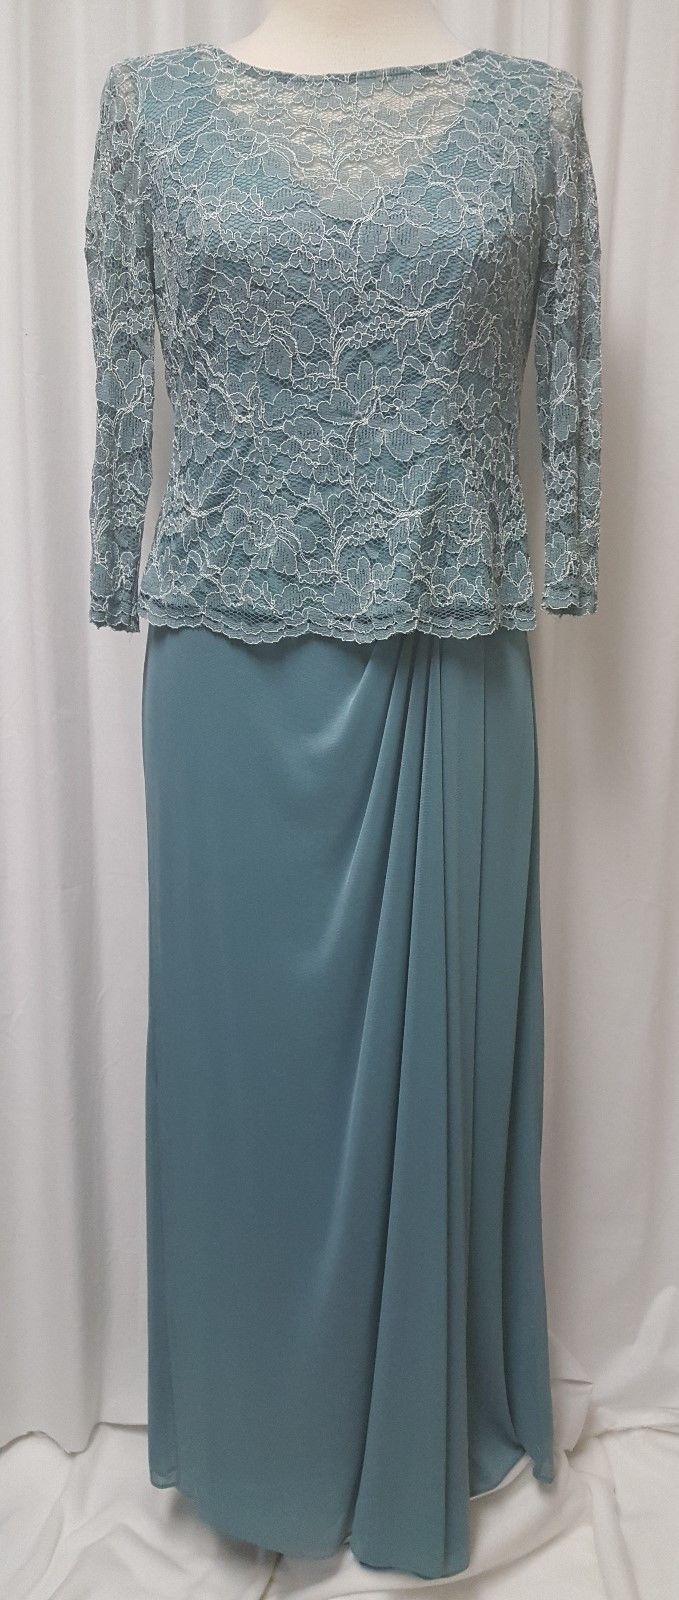 NWT Alex Evenings 3/4 Sleeve Seafoam Lace Bodice Dress Retail $169